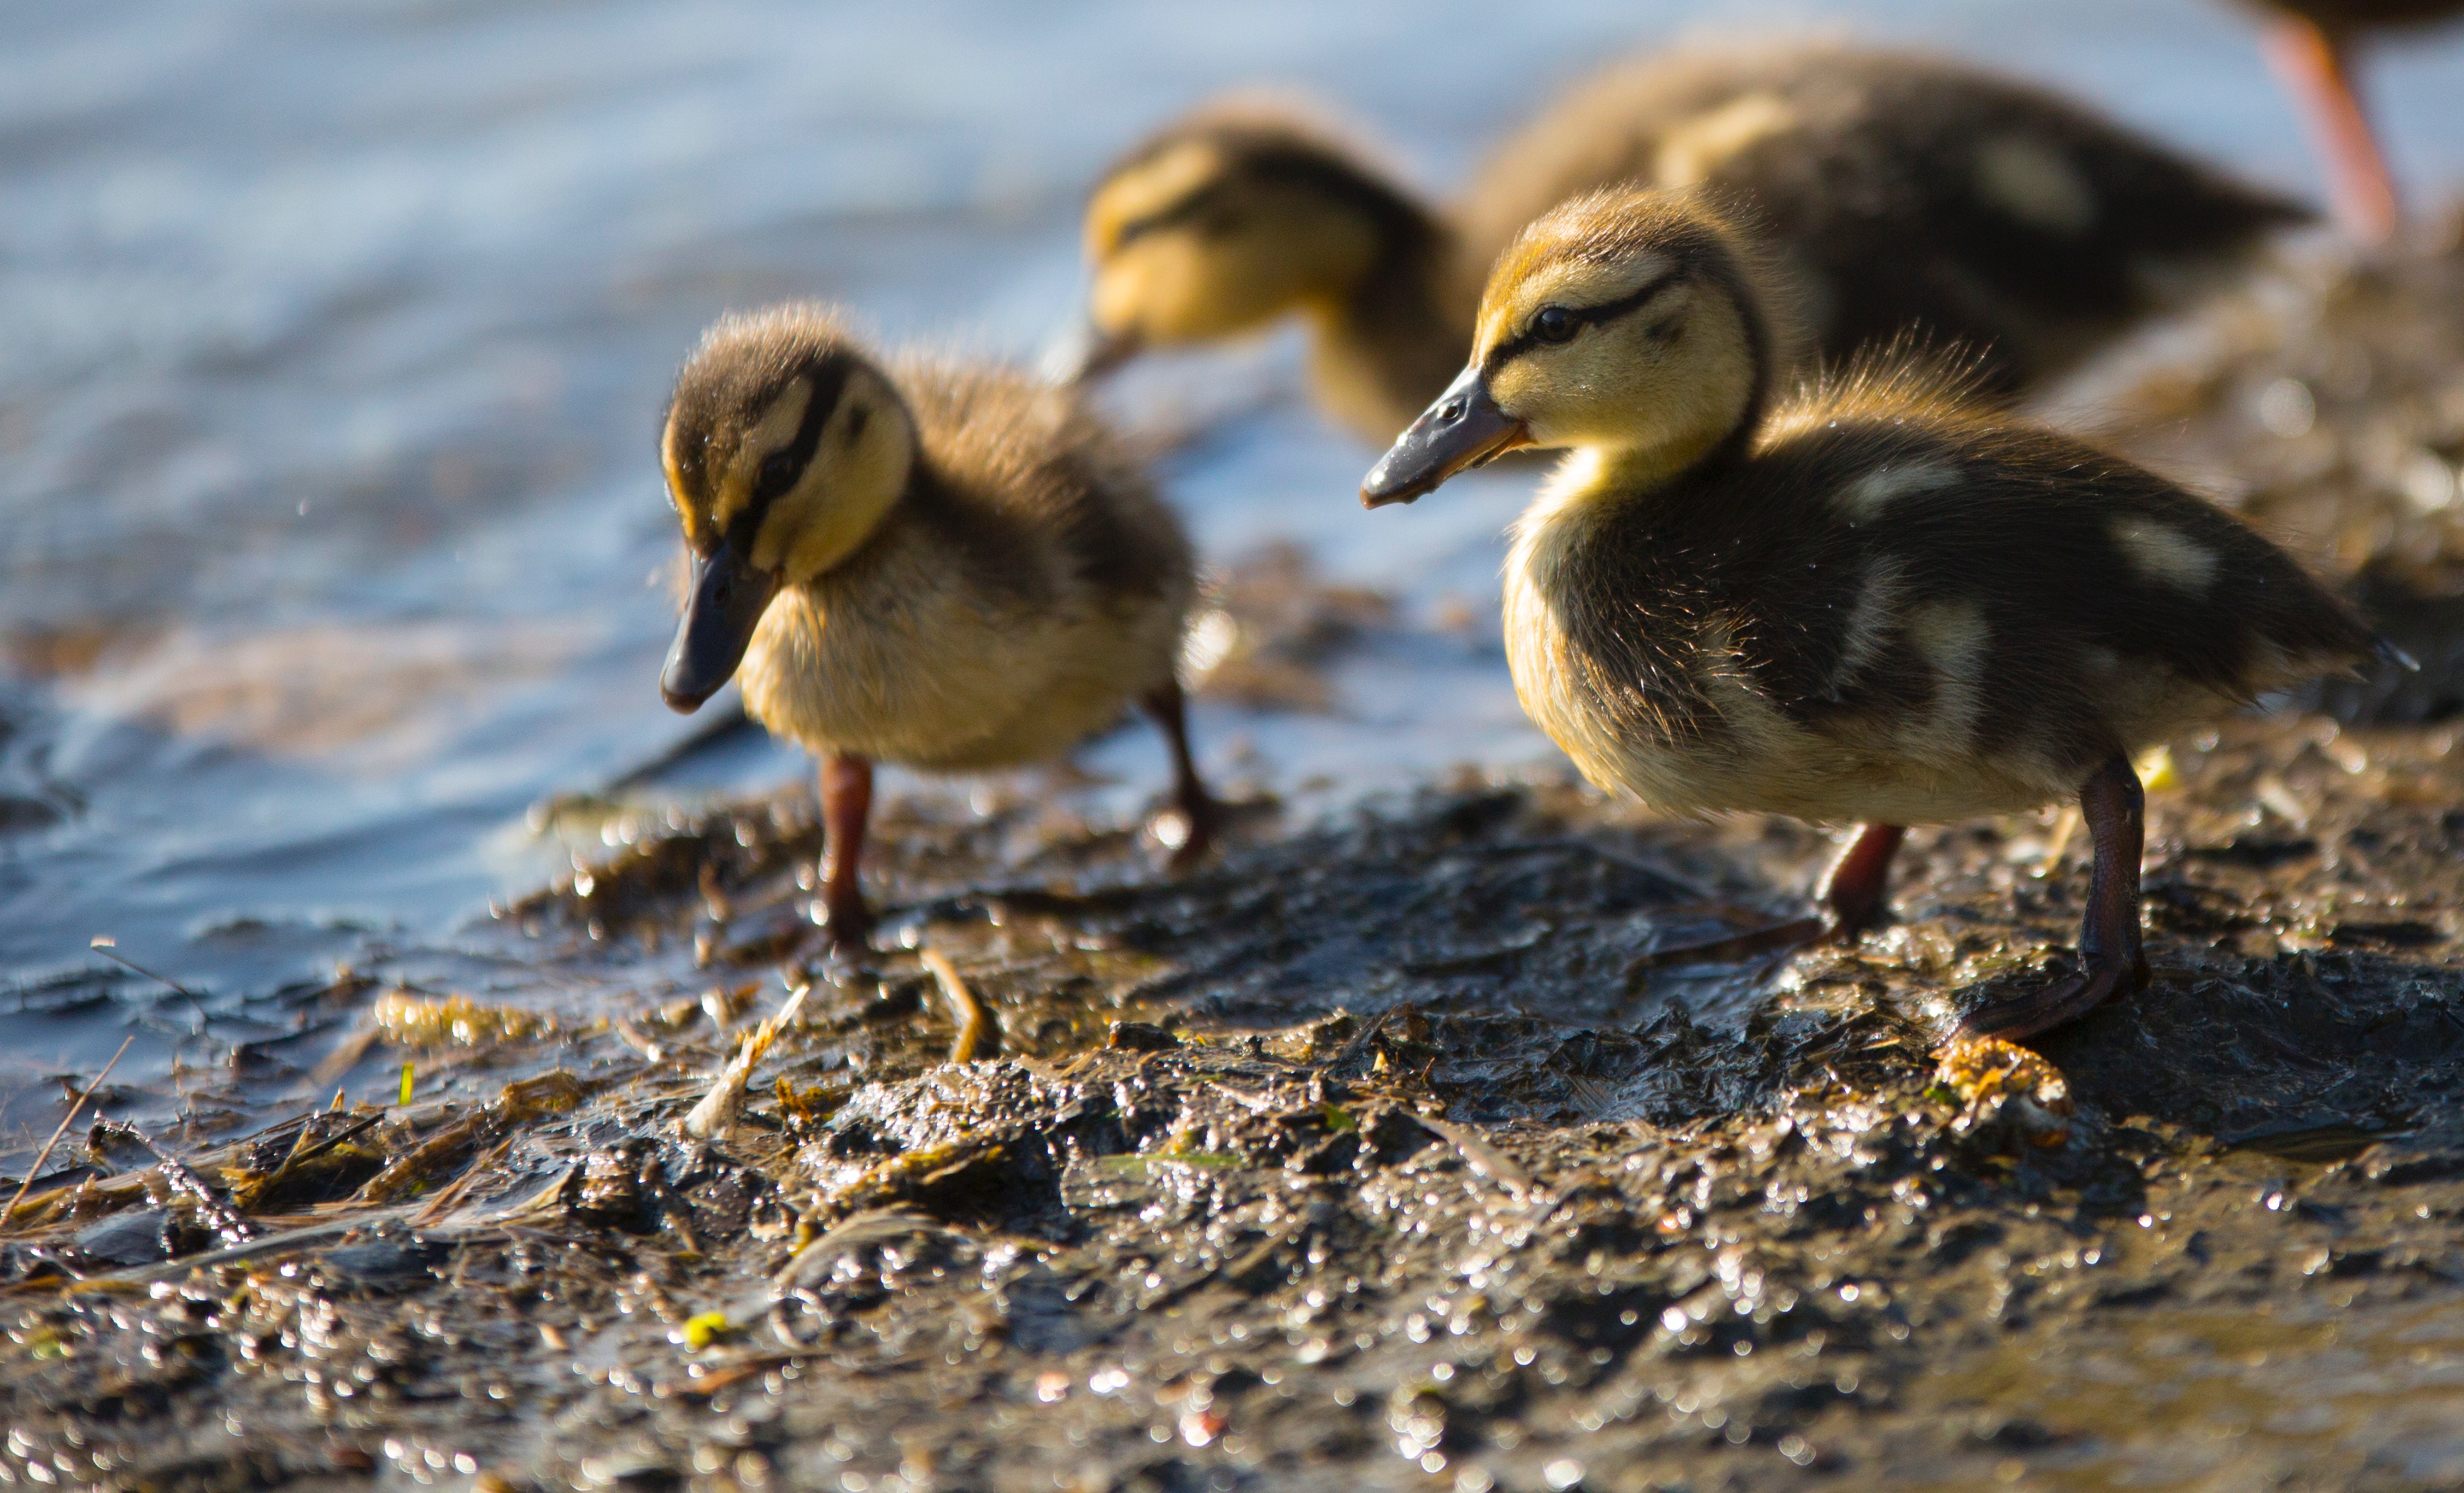 Small ducks walking on wet shore near river · Free